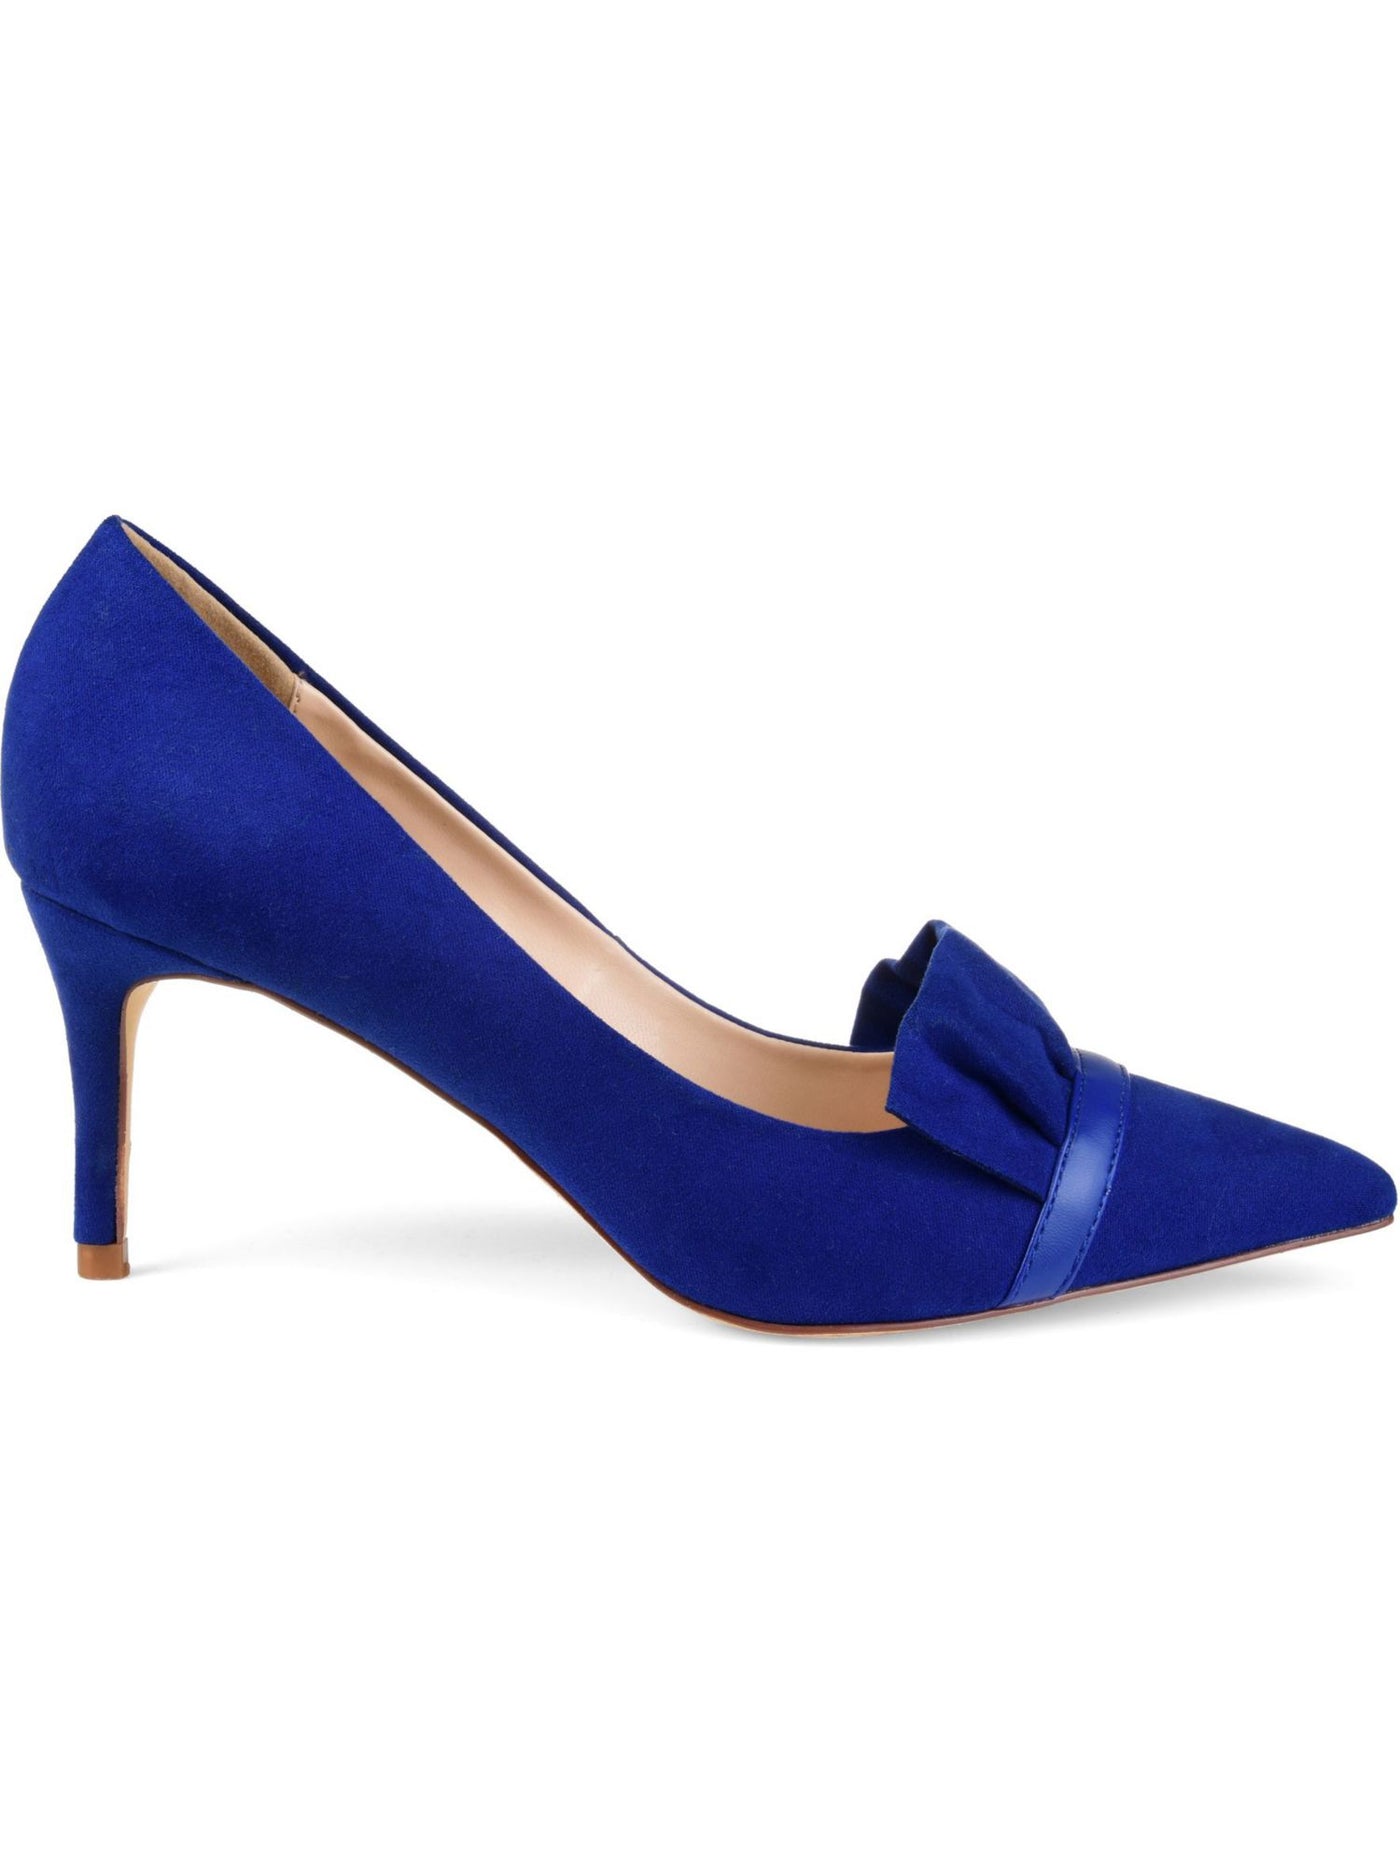 JOURNEE COLLECTION Womens Blue Ruffled Metallic Marek Pointed Toe Kitten Heel Slip On Dress Pumps 9.5